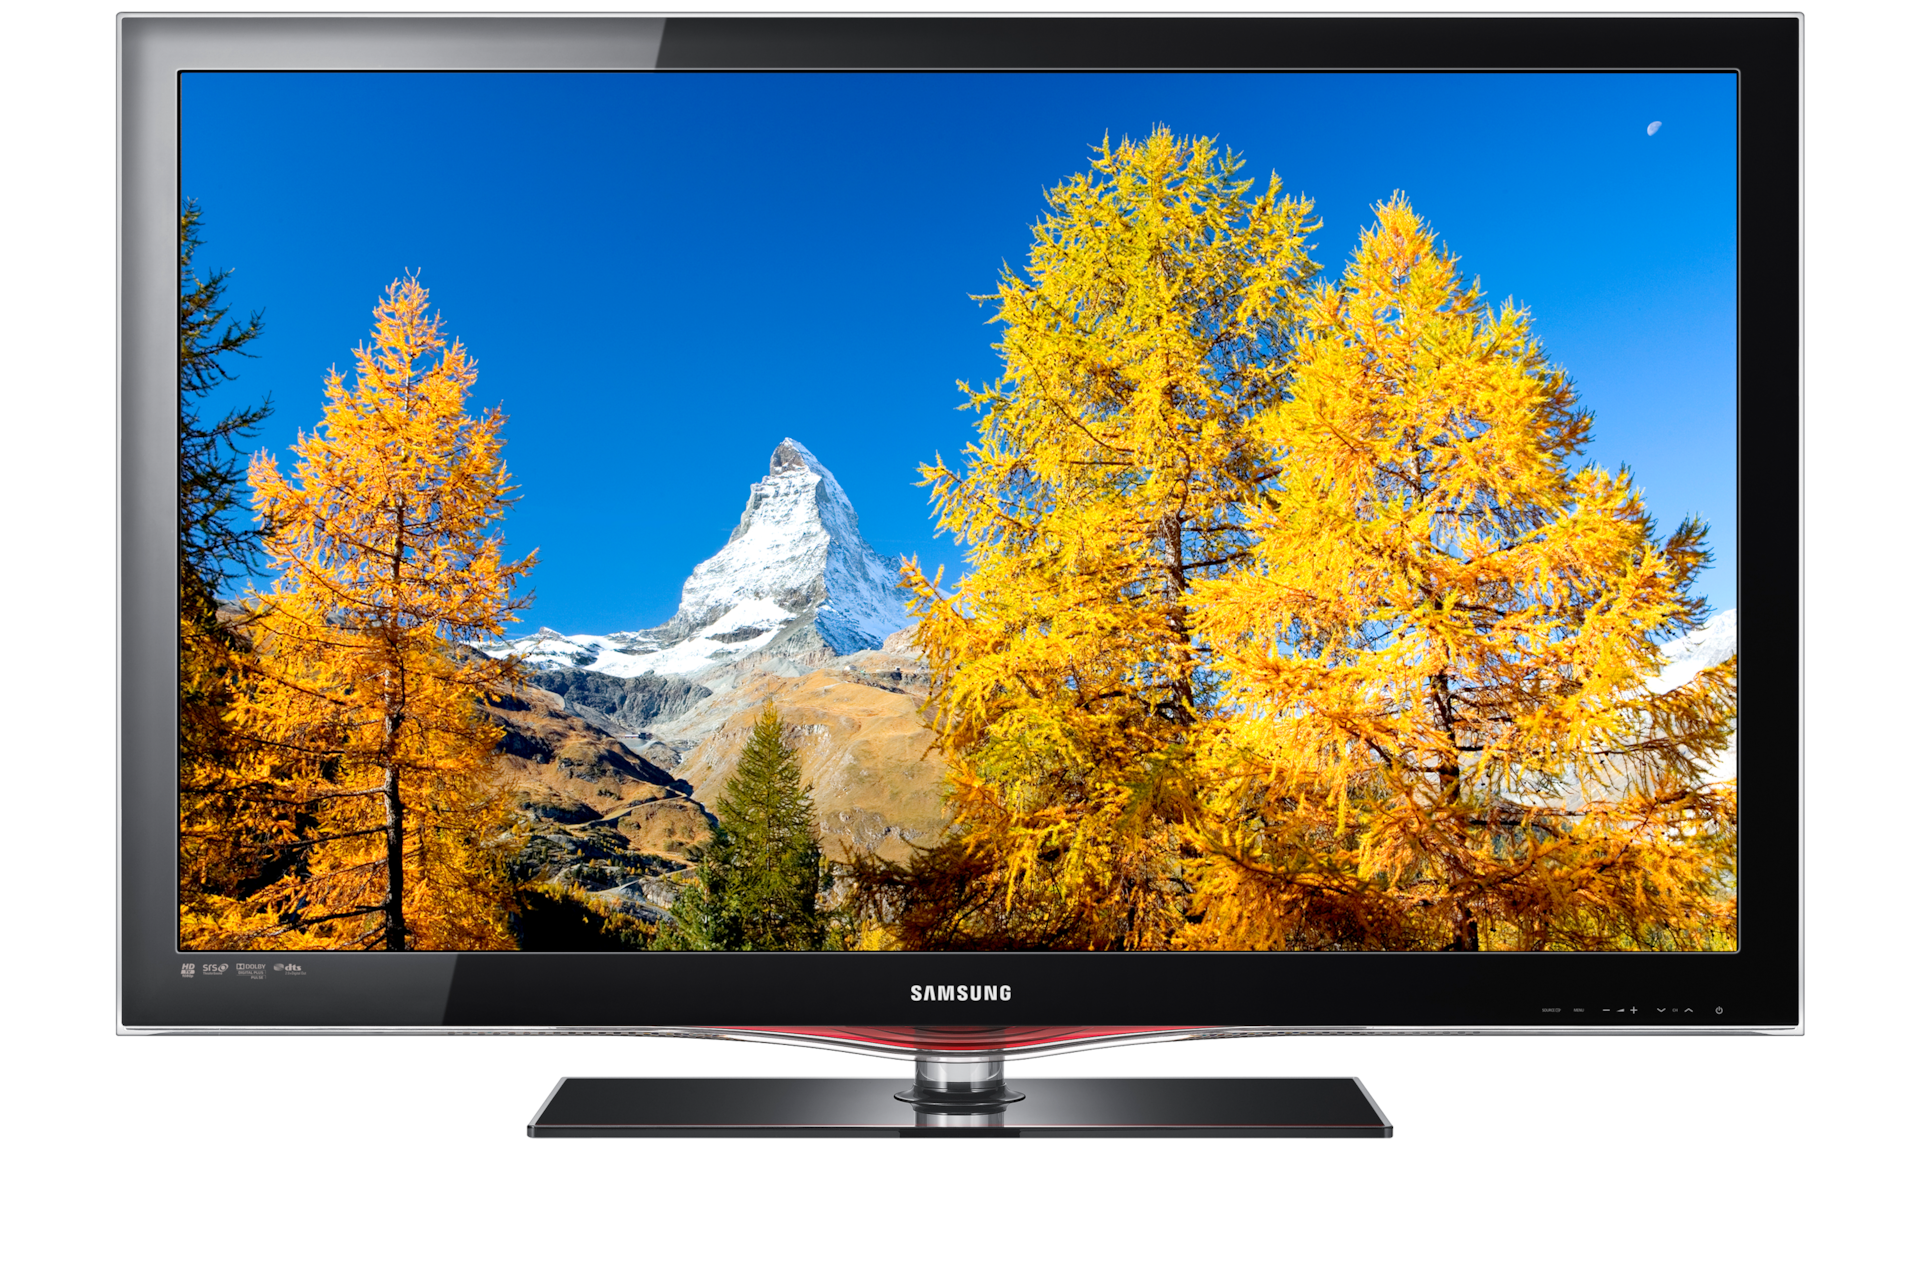 Samsung's 2010 TV lineup (photos) - CNET